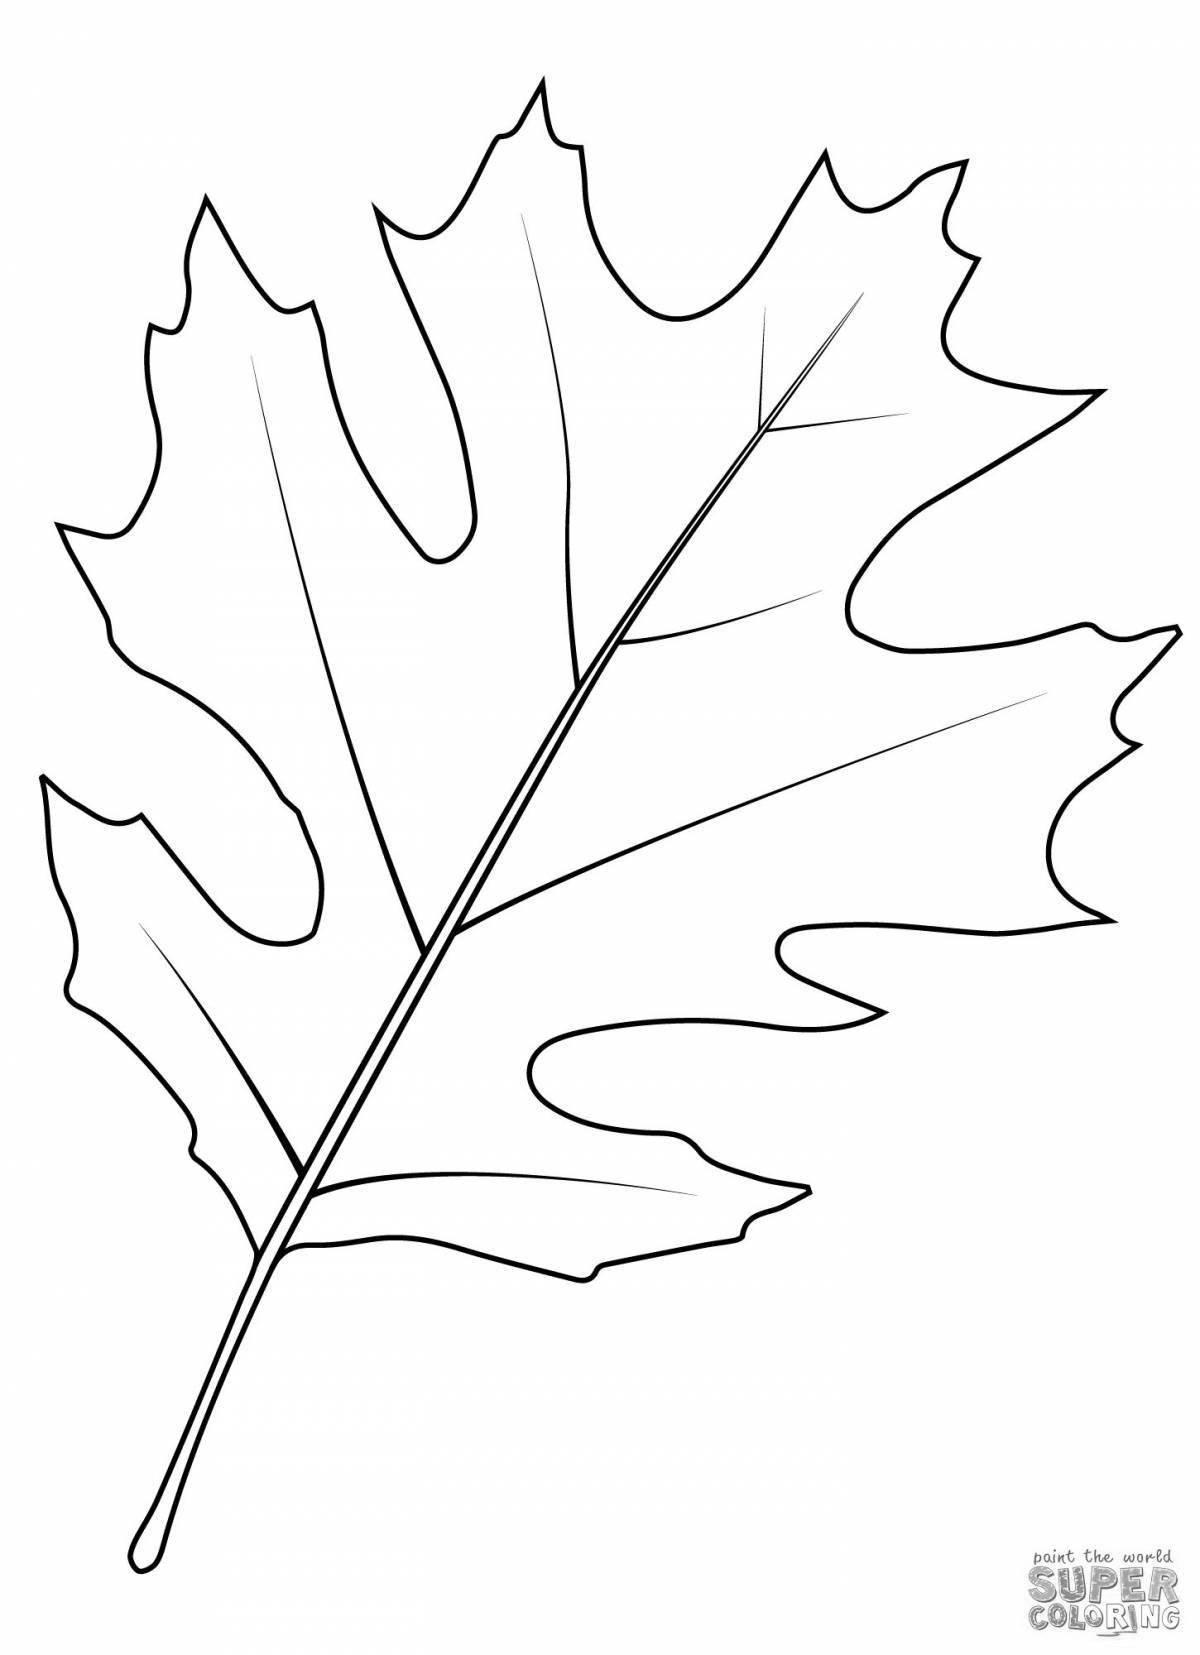 Shiny oak leaf coloring book